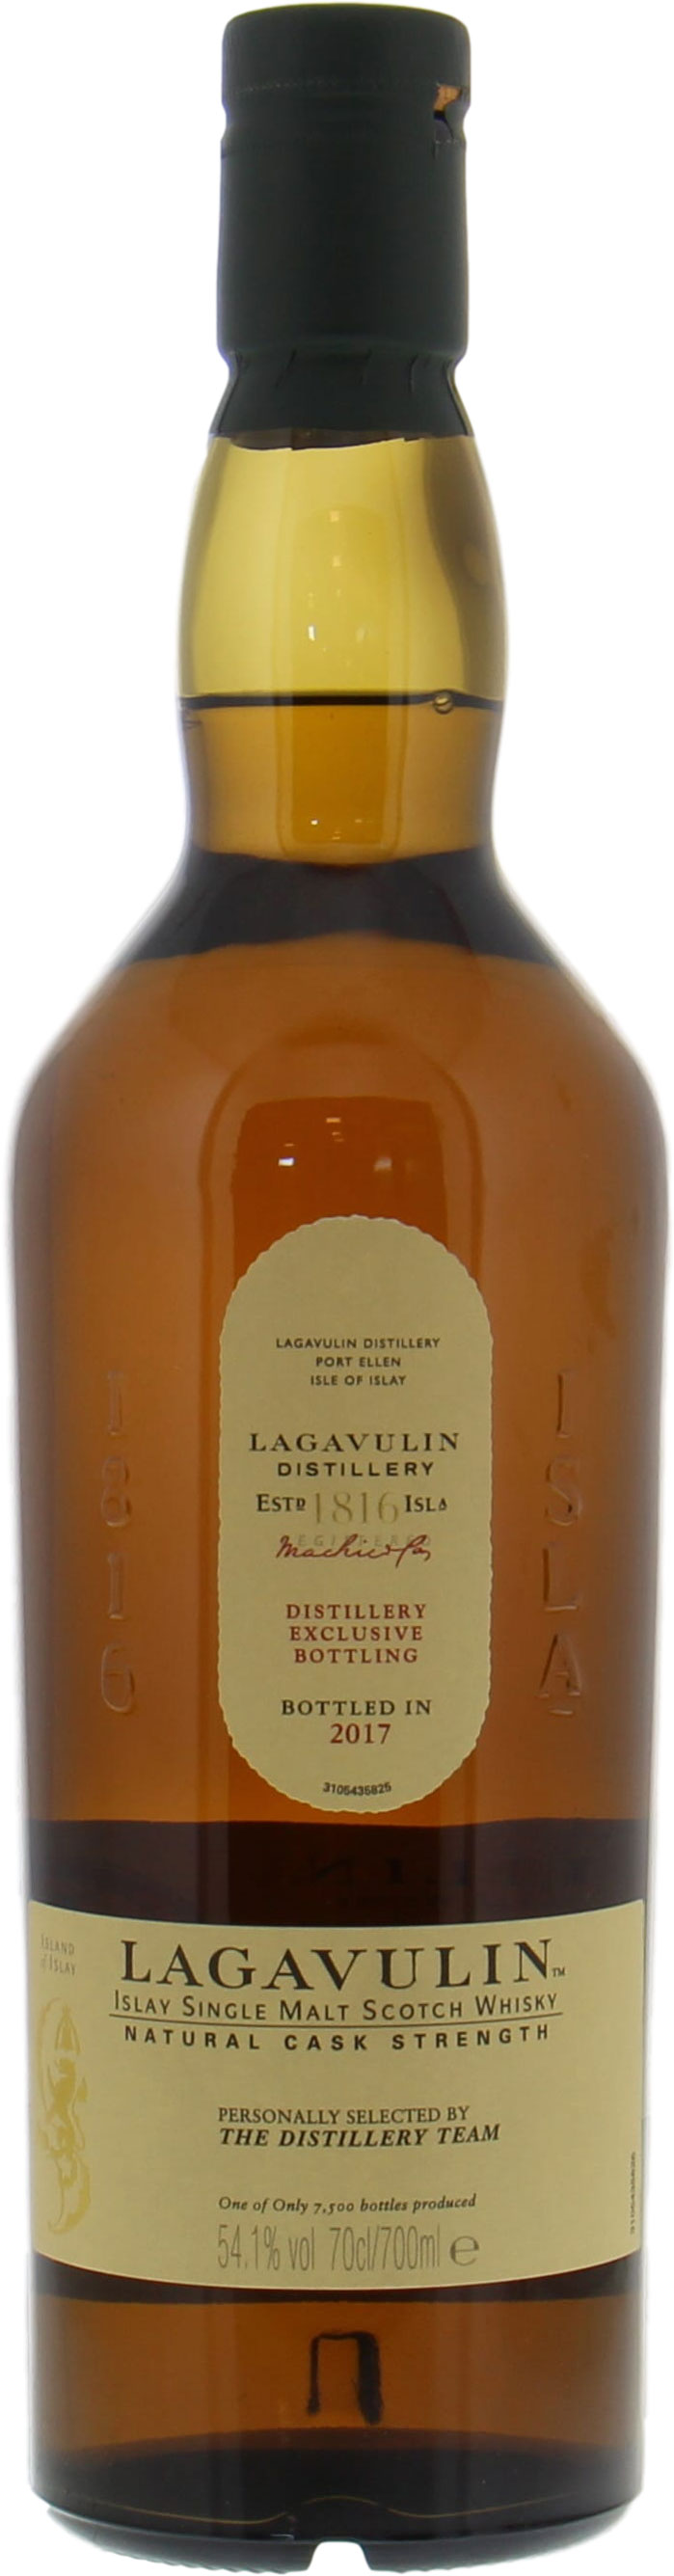 Lagavulin - Distillery Exclusive Bottling 2017 54.1% NV Perfect